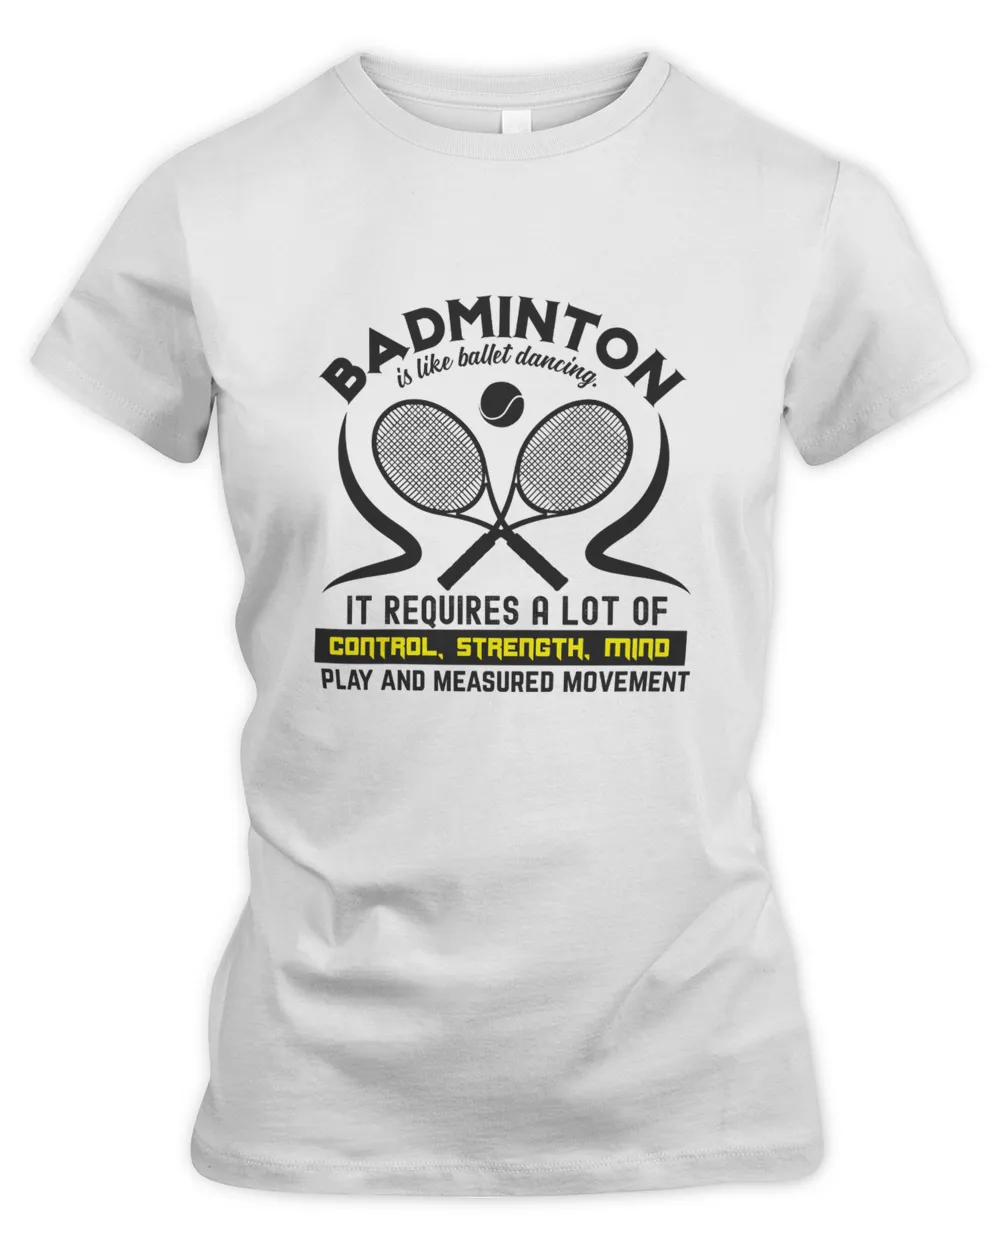 BADMINTONis Like Ballet Dancing Shirt, Badminton Shirt,Badminton T-shirt,Funny Badminton Shirt, Badminton Gift,Sport Shirt